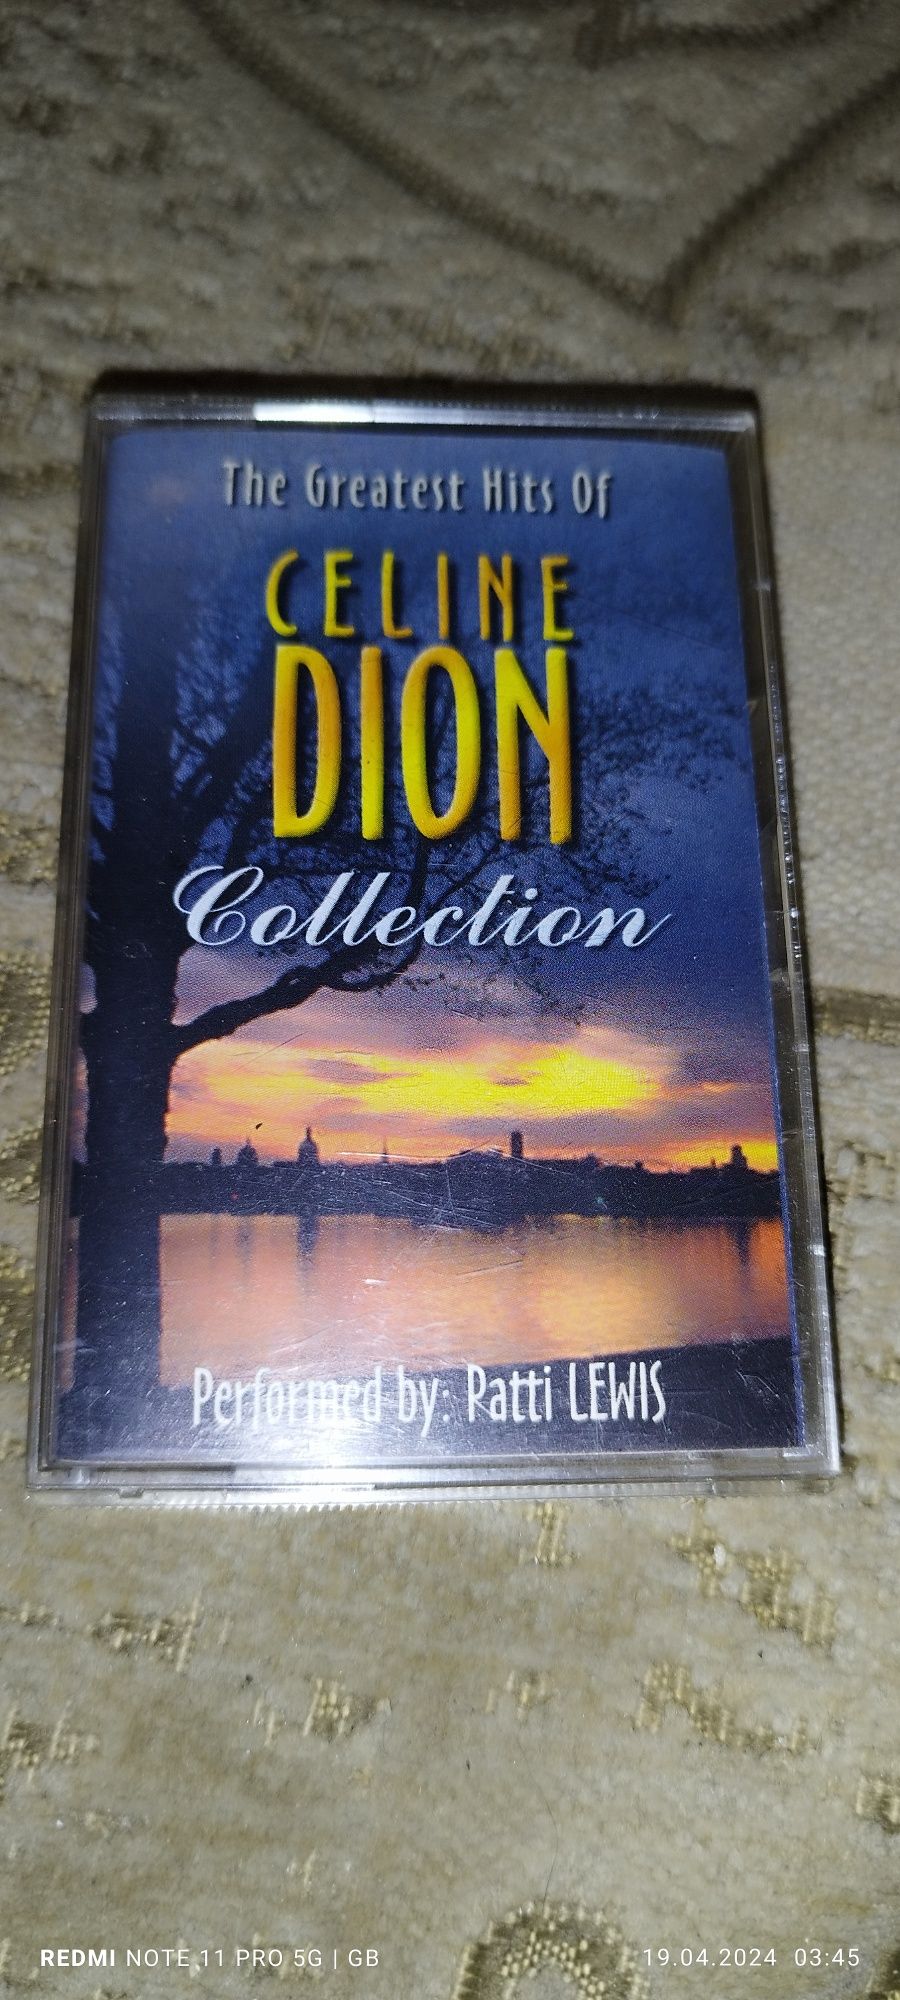 Sprzedam Kasete  magnetofonową Celine Dion collection the greatesr hit